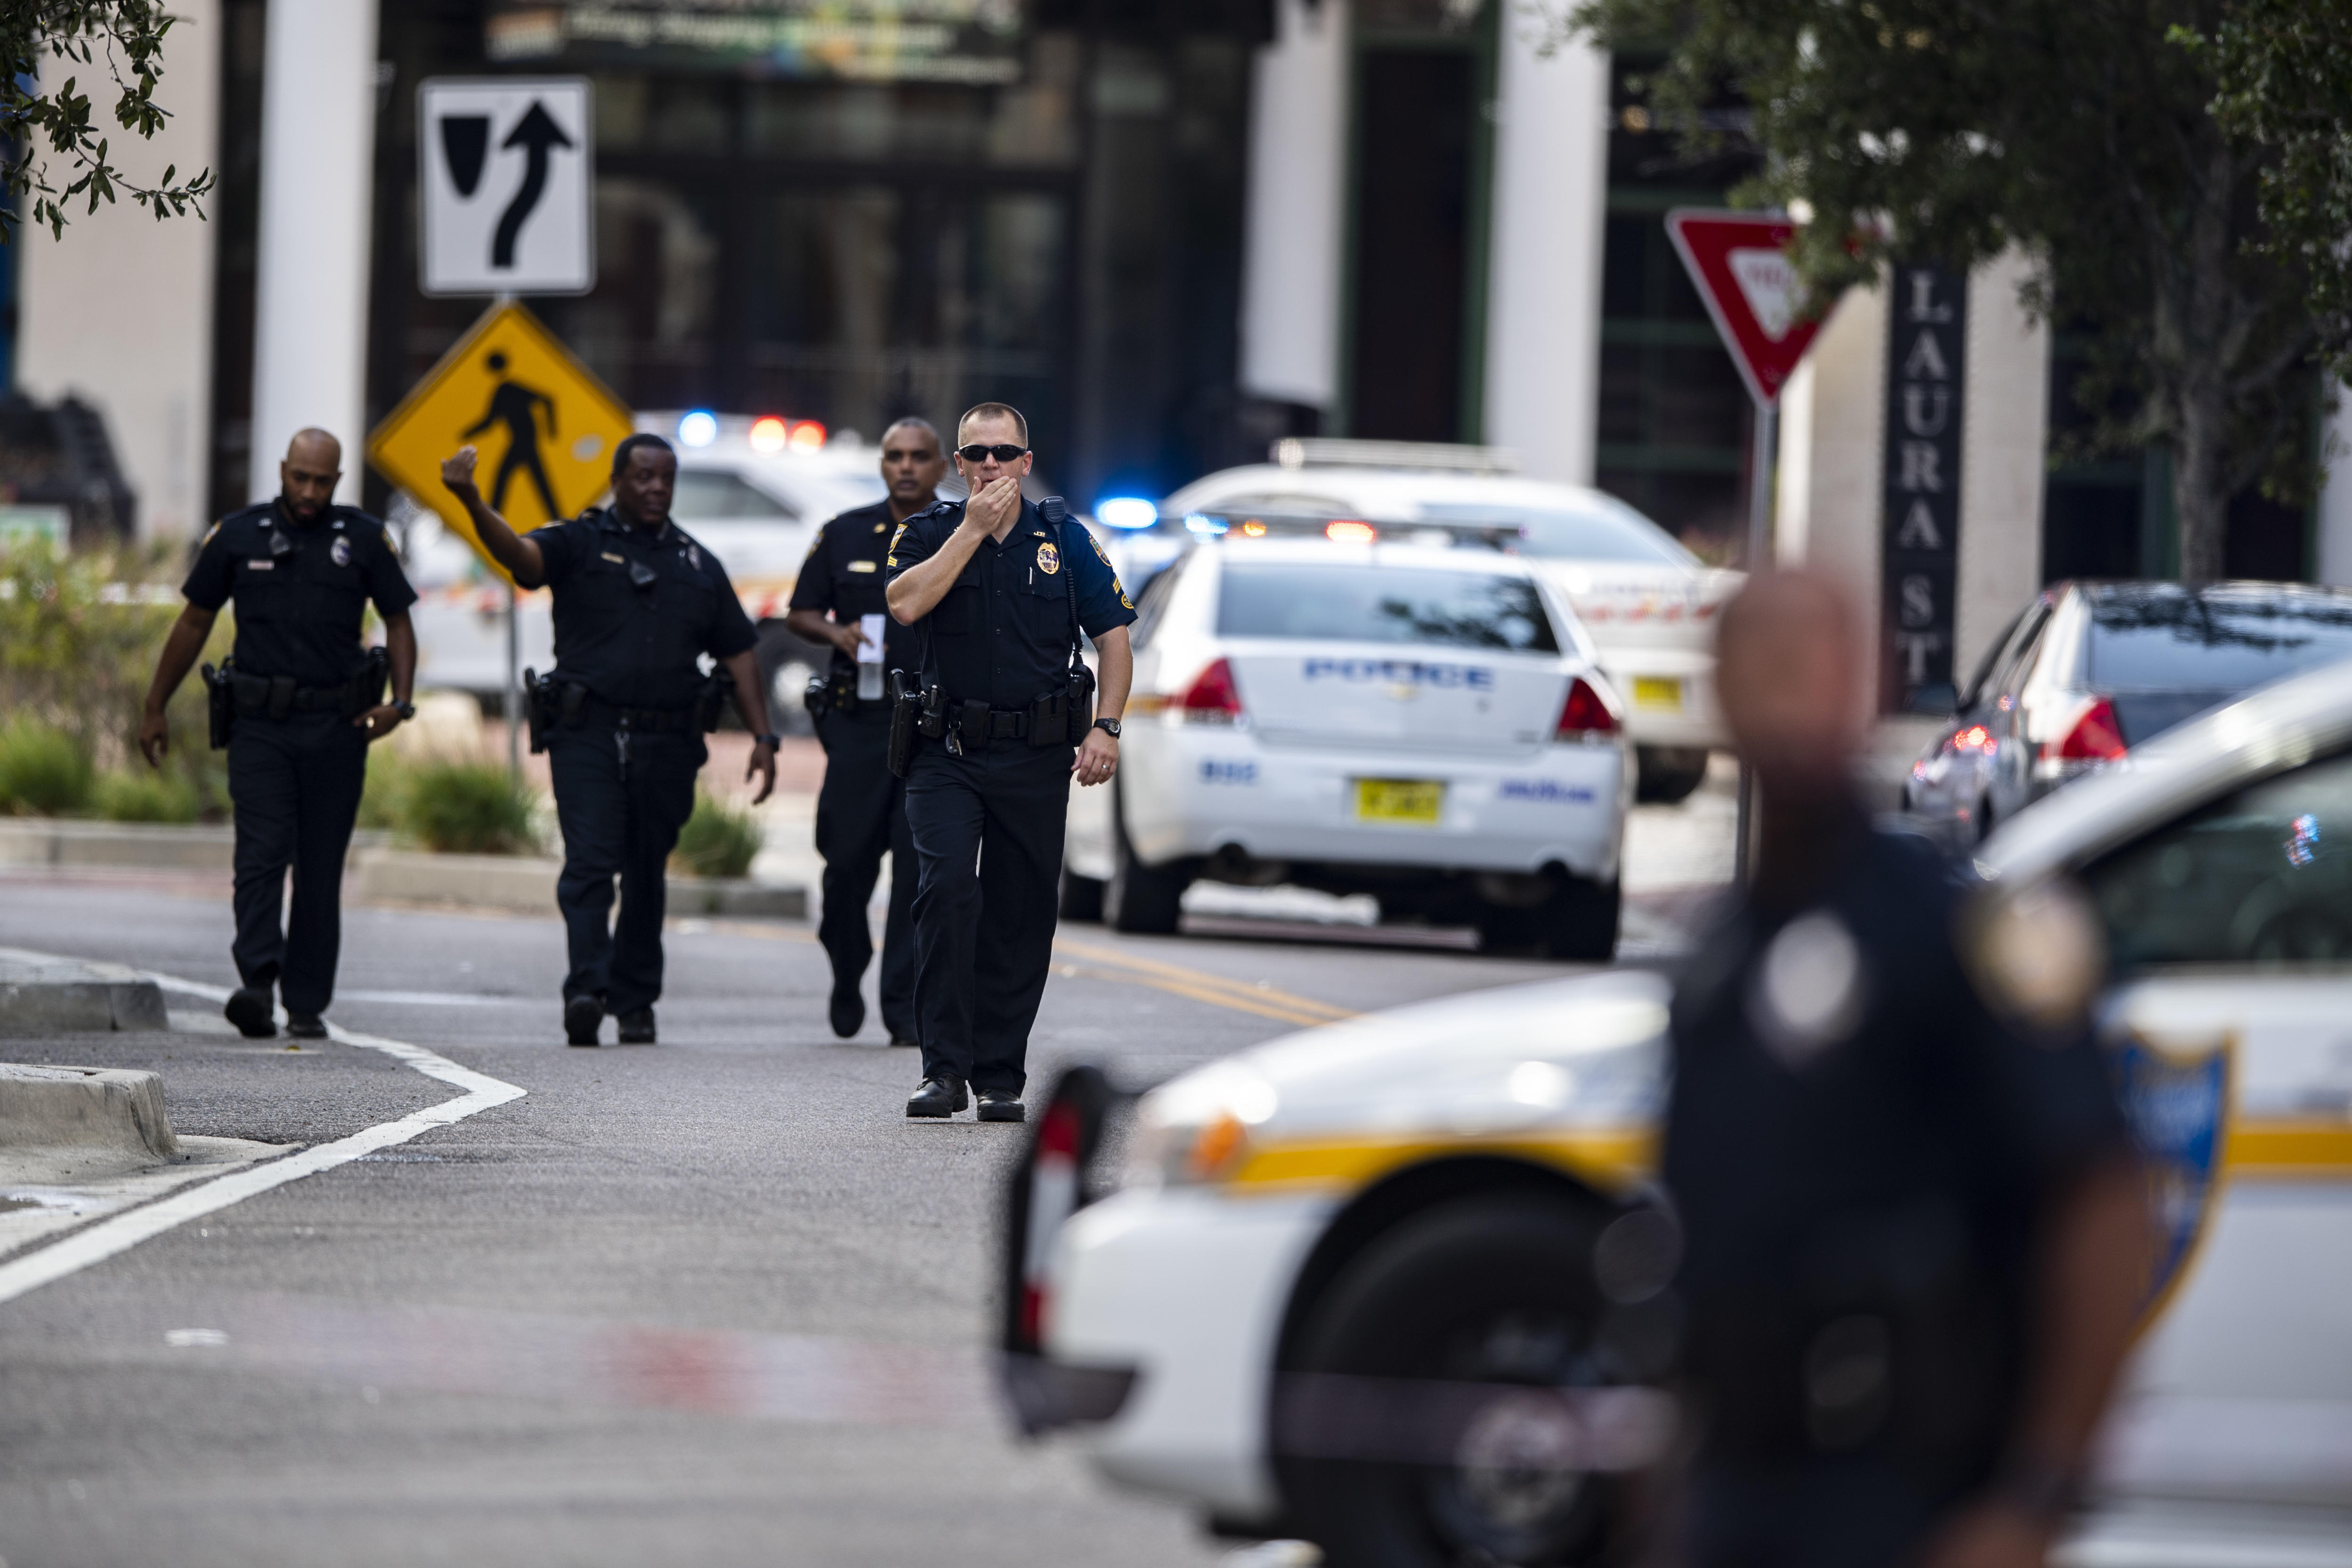 Jacksonville mass shooting Suspect David Katz among 3 killed today at Madden NFL 19 gaming